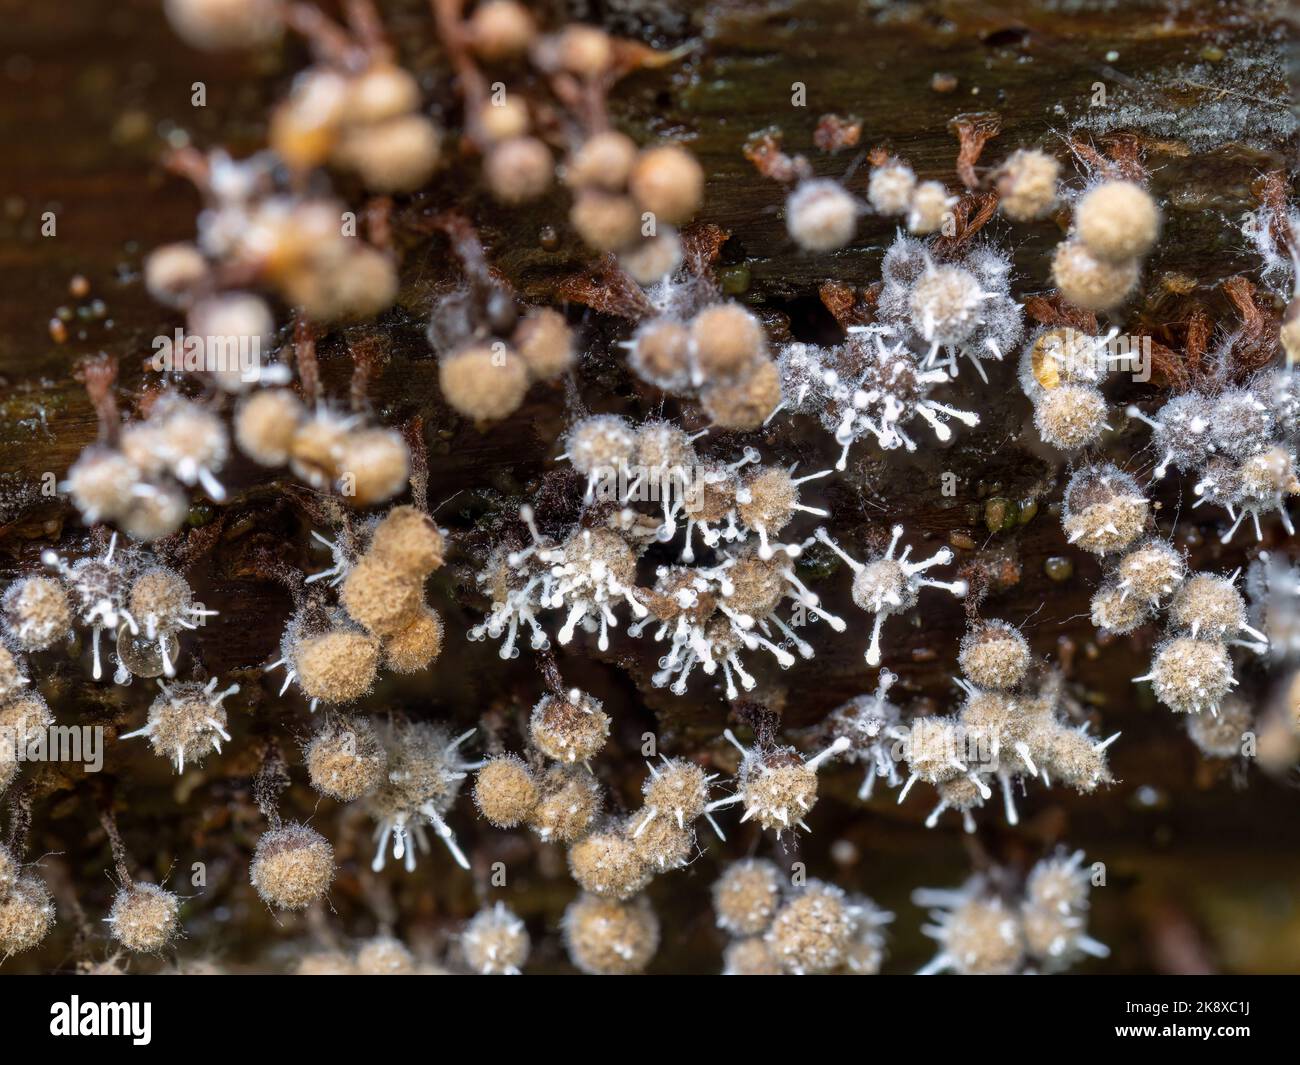 Closeup macro shot of Parasitic fungus, Polycephalomyces tomentosus growing on Trichia slime mould, mold. Devon, UK. Stock Photo